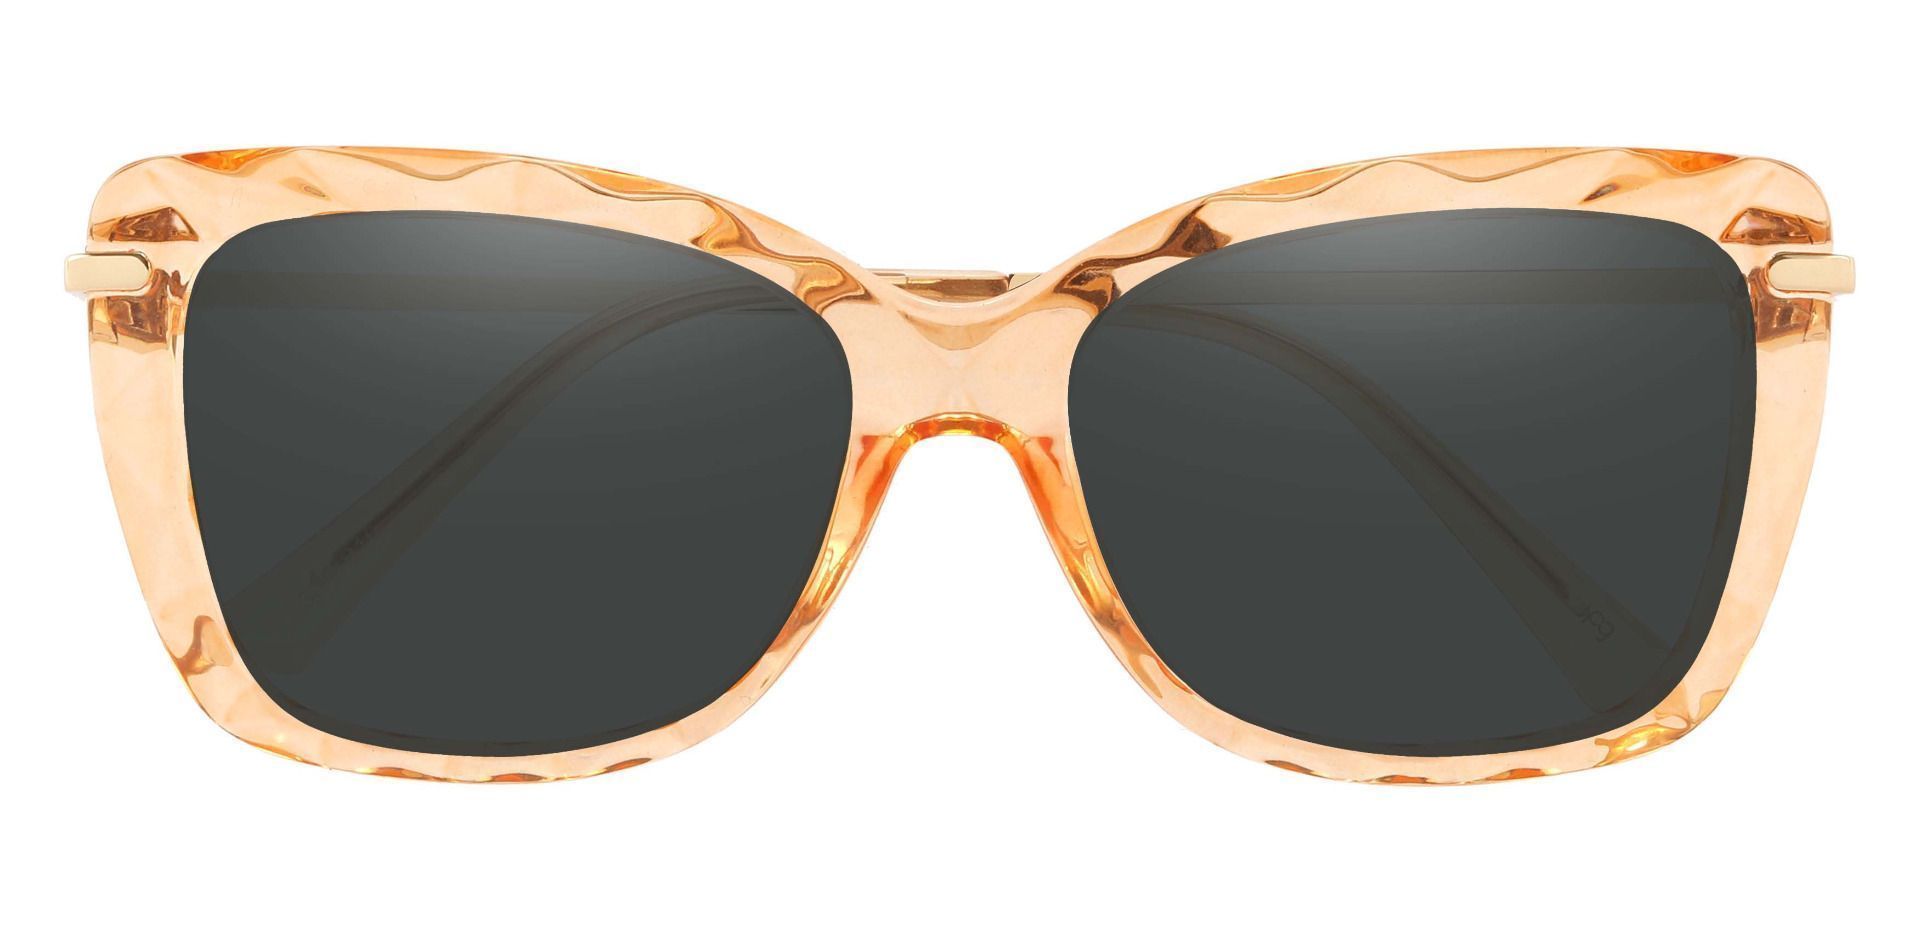 Shoshanna Rectangle Prescription Sunglasses - Brown Frame With Gray Lenses